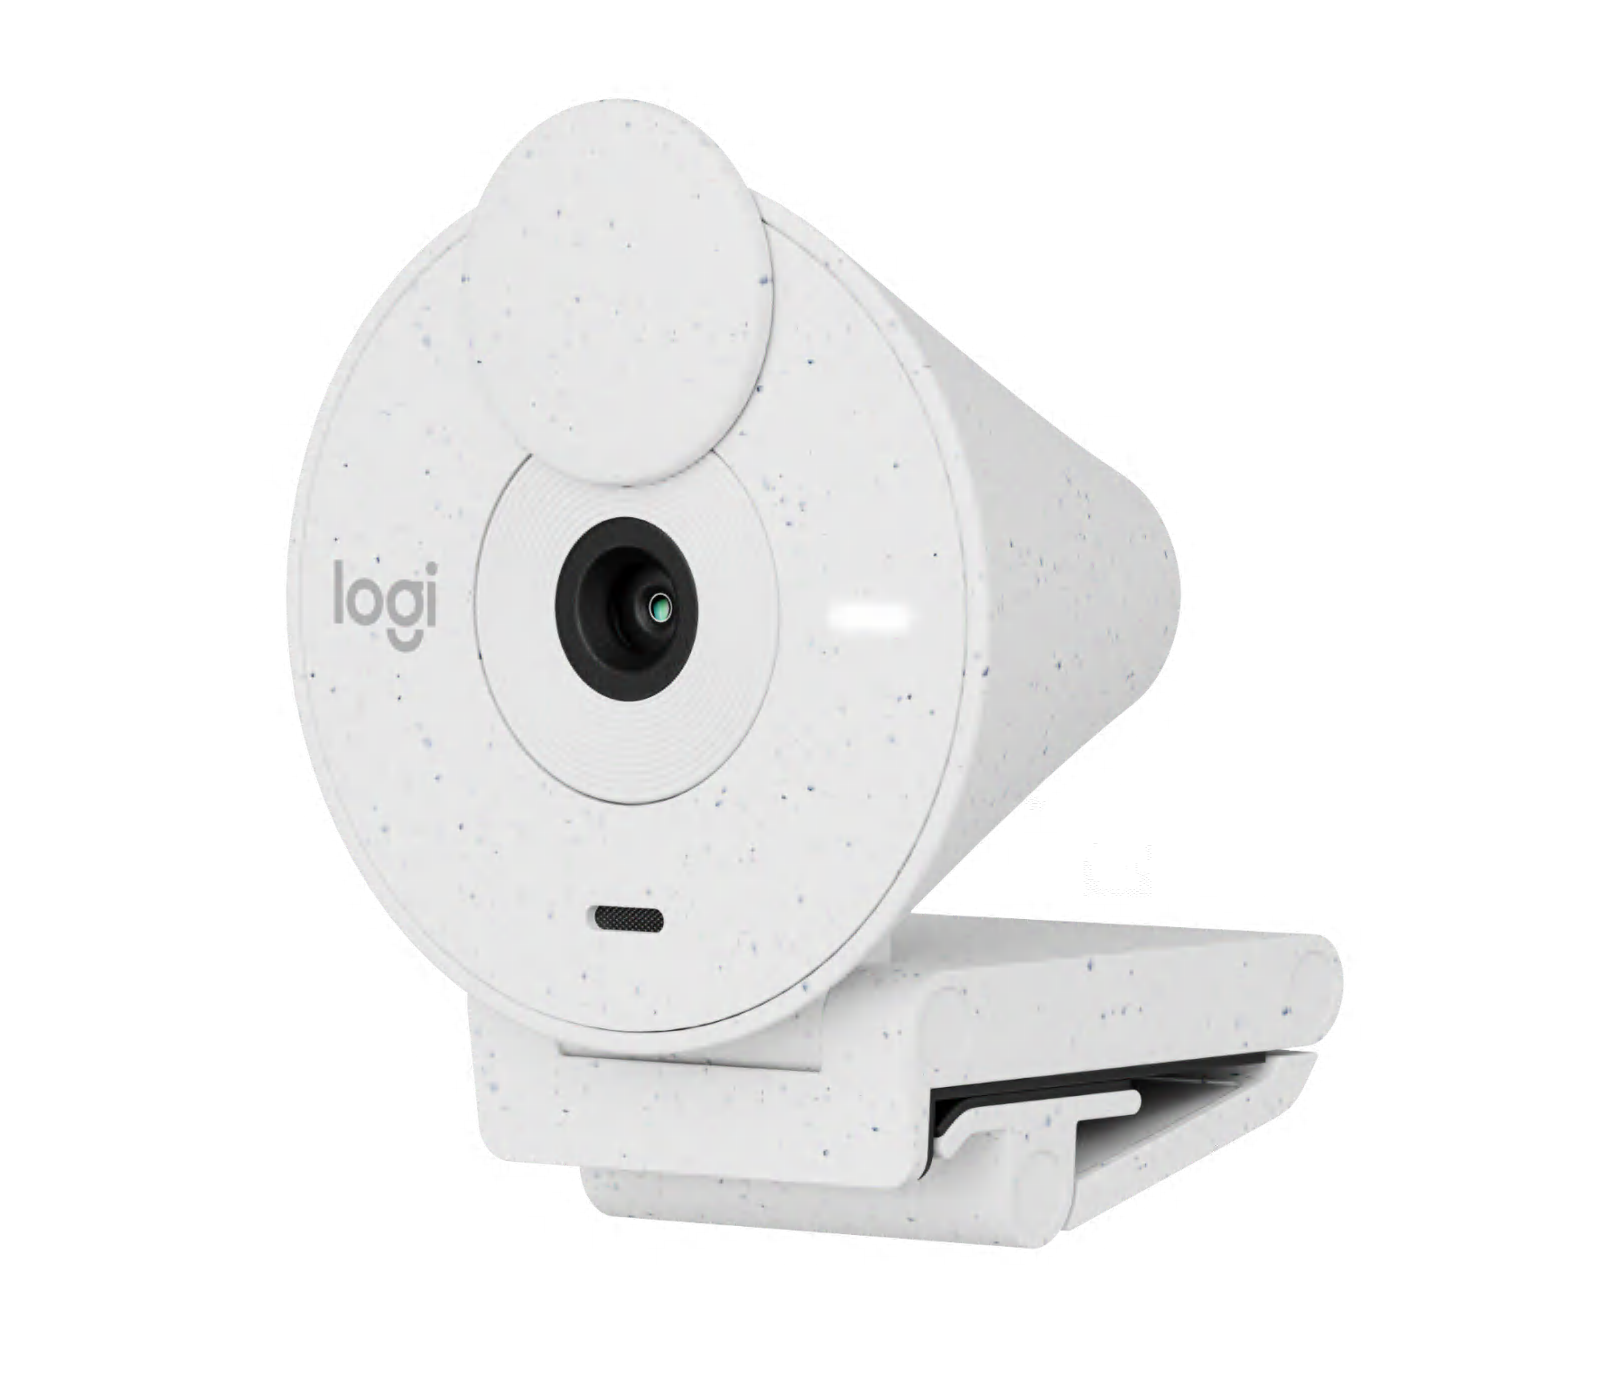 Brio 300 Full HD Webcam | Logitech